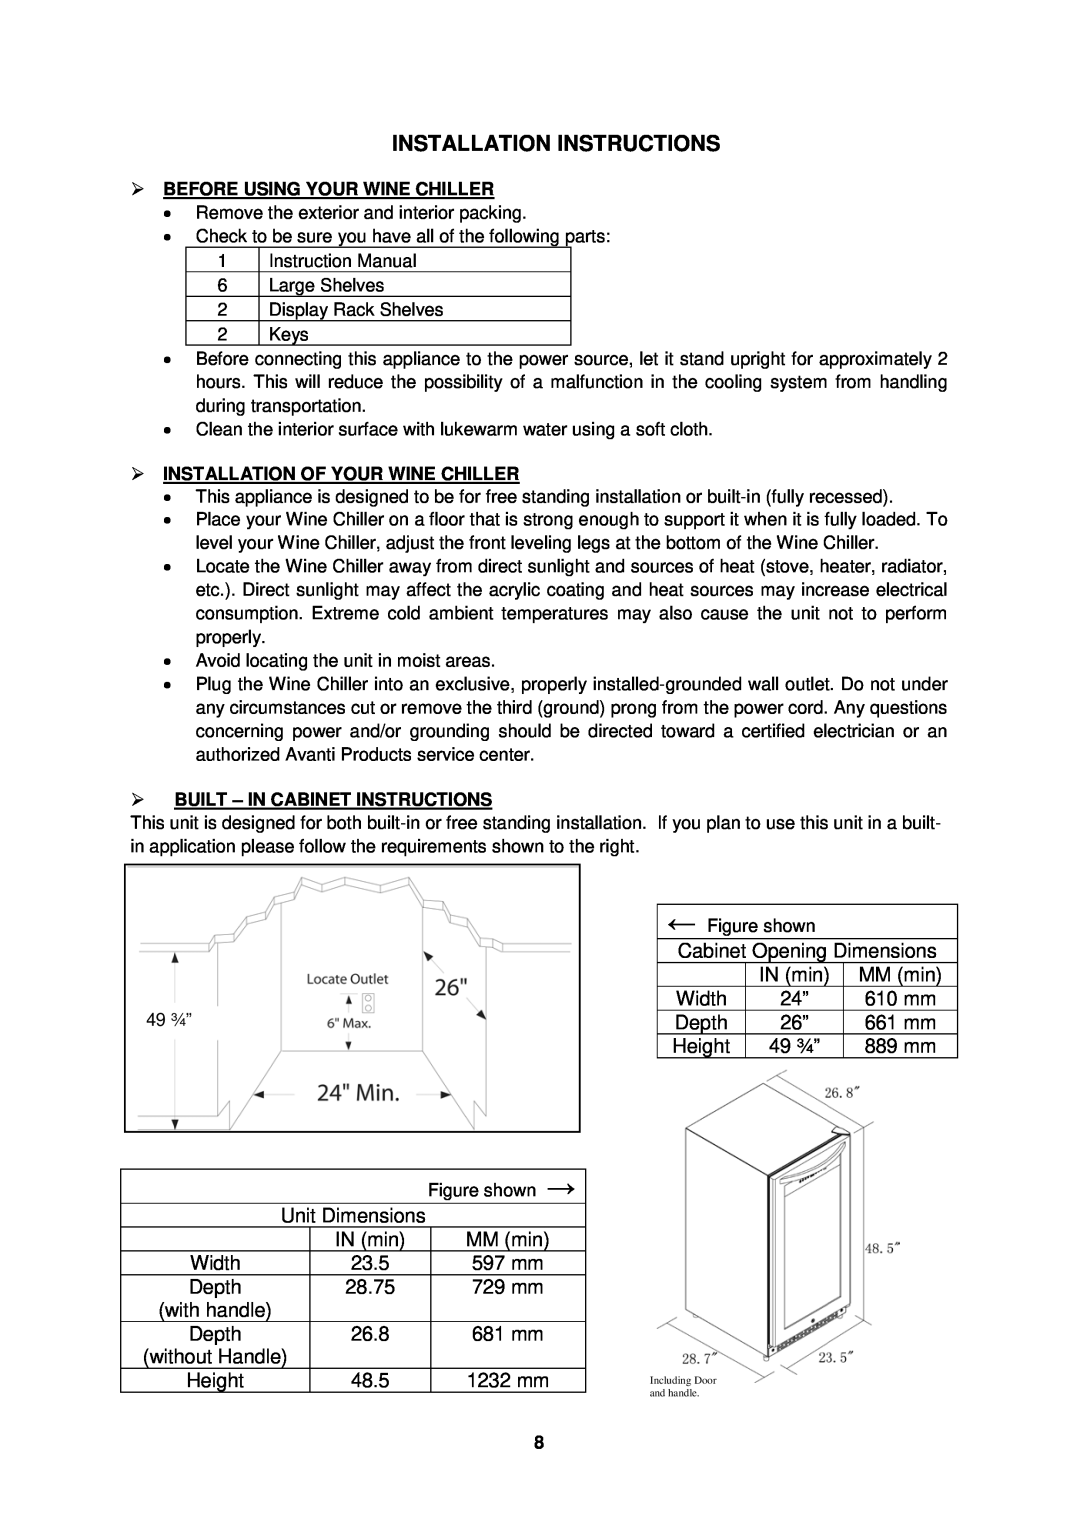 Avanti WCR8500SDZ instruction manual Installation Instructions, 49 ¾”, Width, 597 mm, 729 mm, 681 mm, 1232 mm 